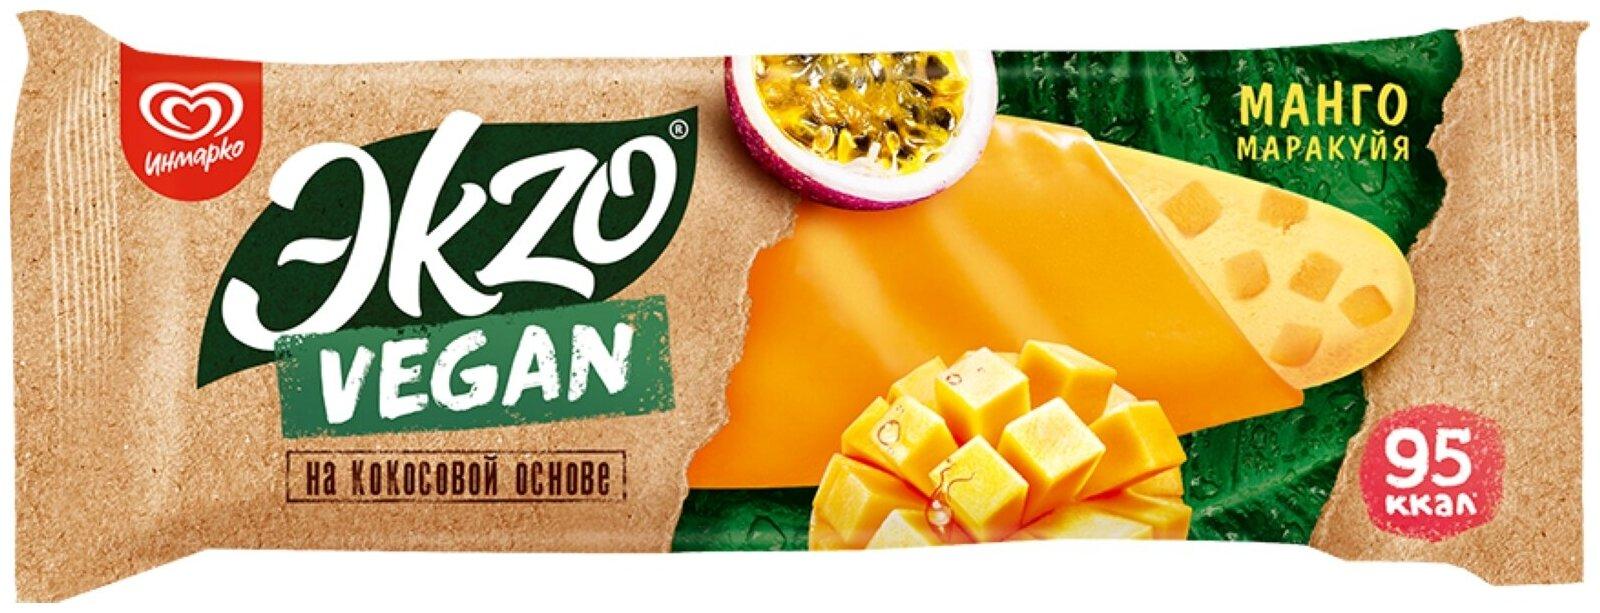 Мороженое Эkzo Vegan на кокосовой основе манго-маракуйя 70 гр., флоу-пак